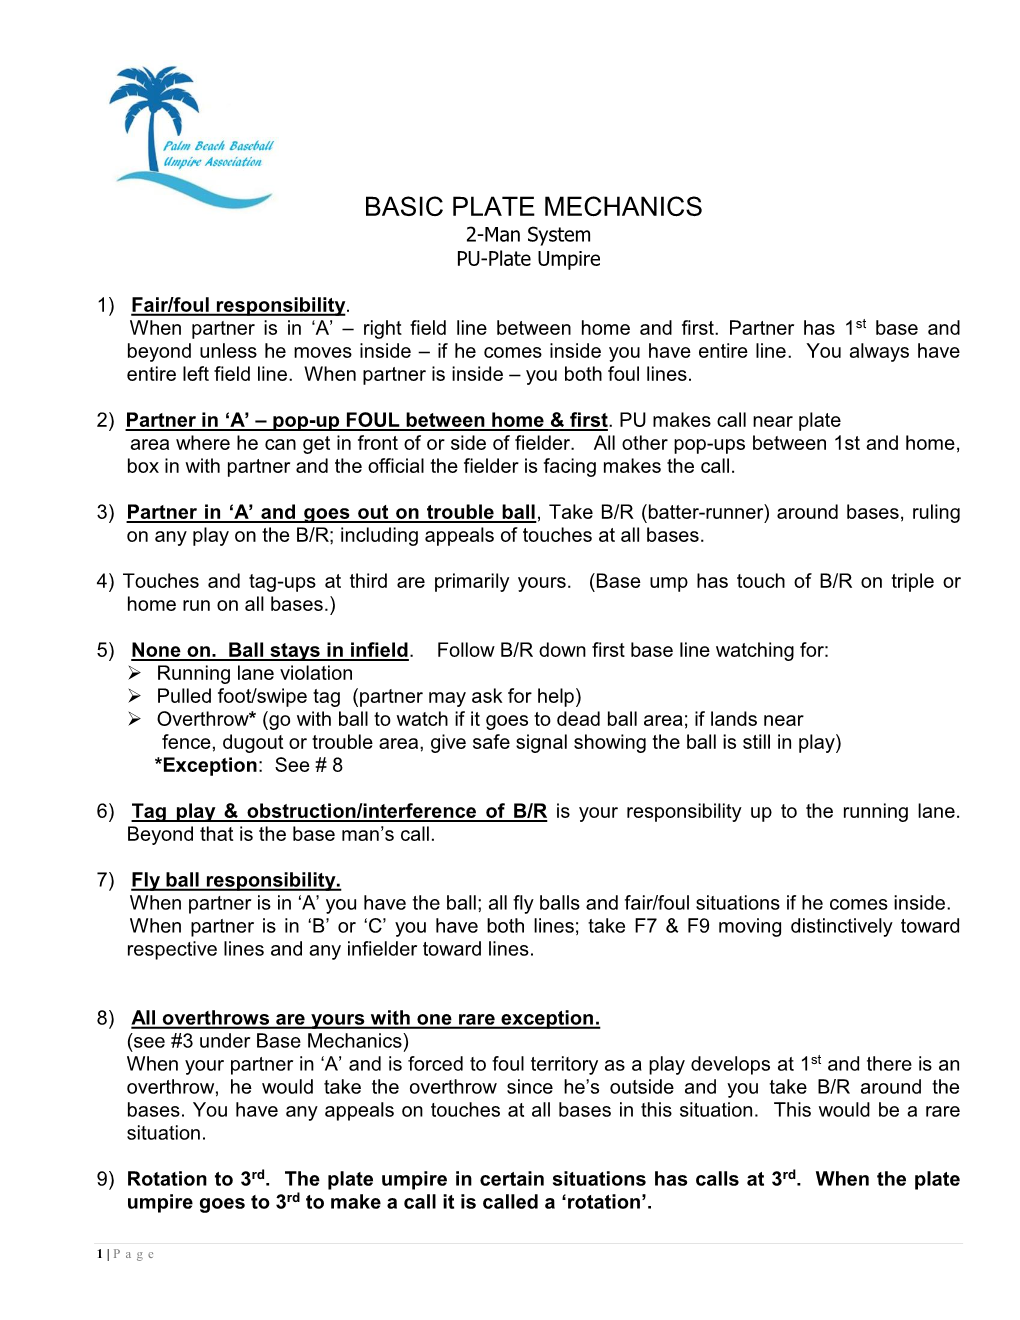 BASIC PLATE MECHANICS 2-Man System PU-Plate Umpire